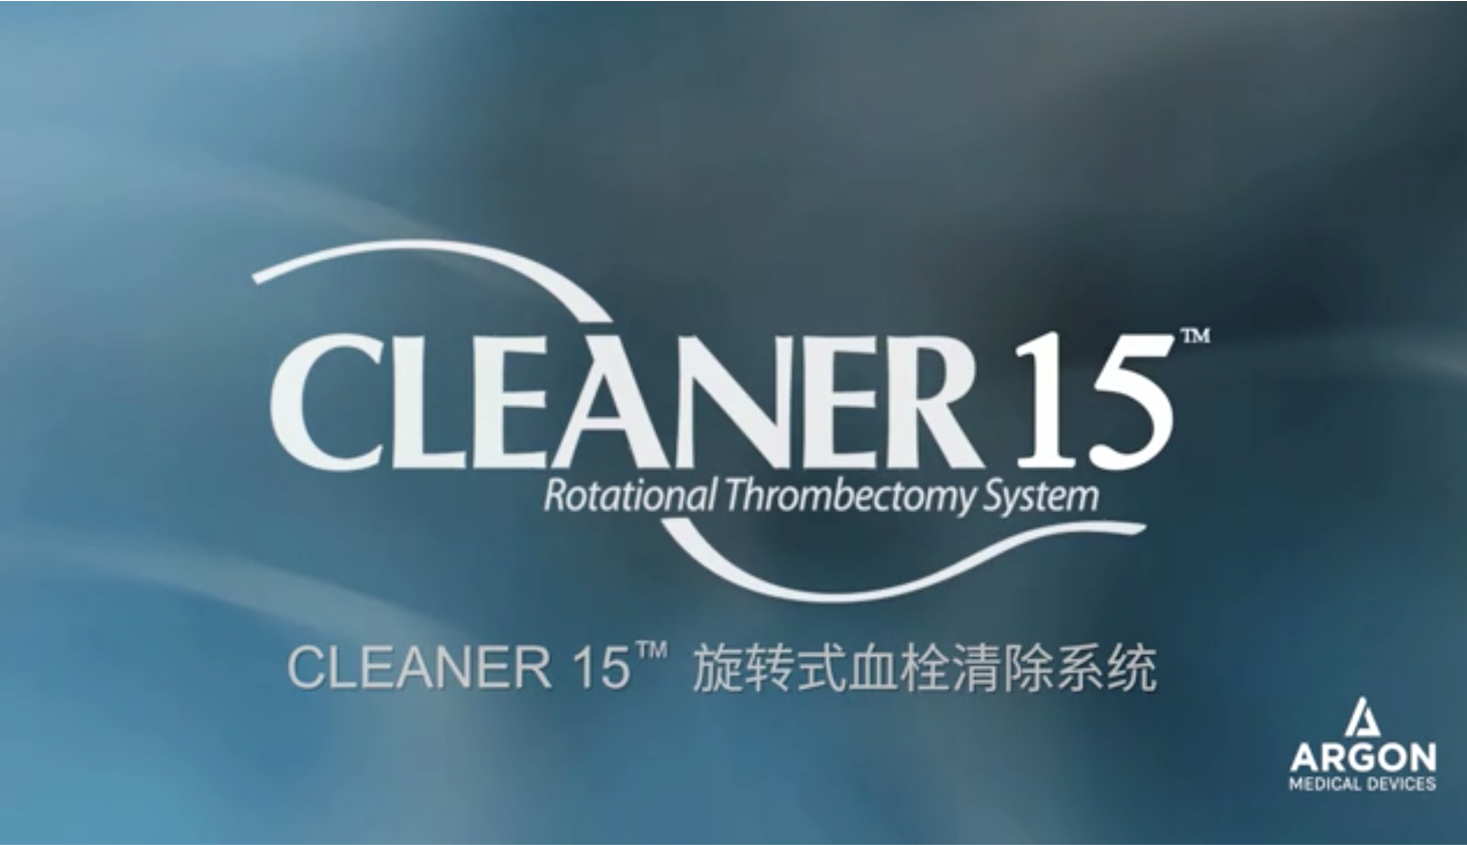 Cleaner 15旋轉式血栓清除系統產品介紹